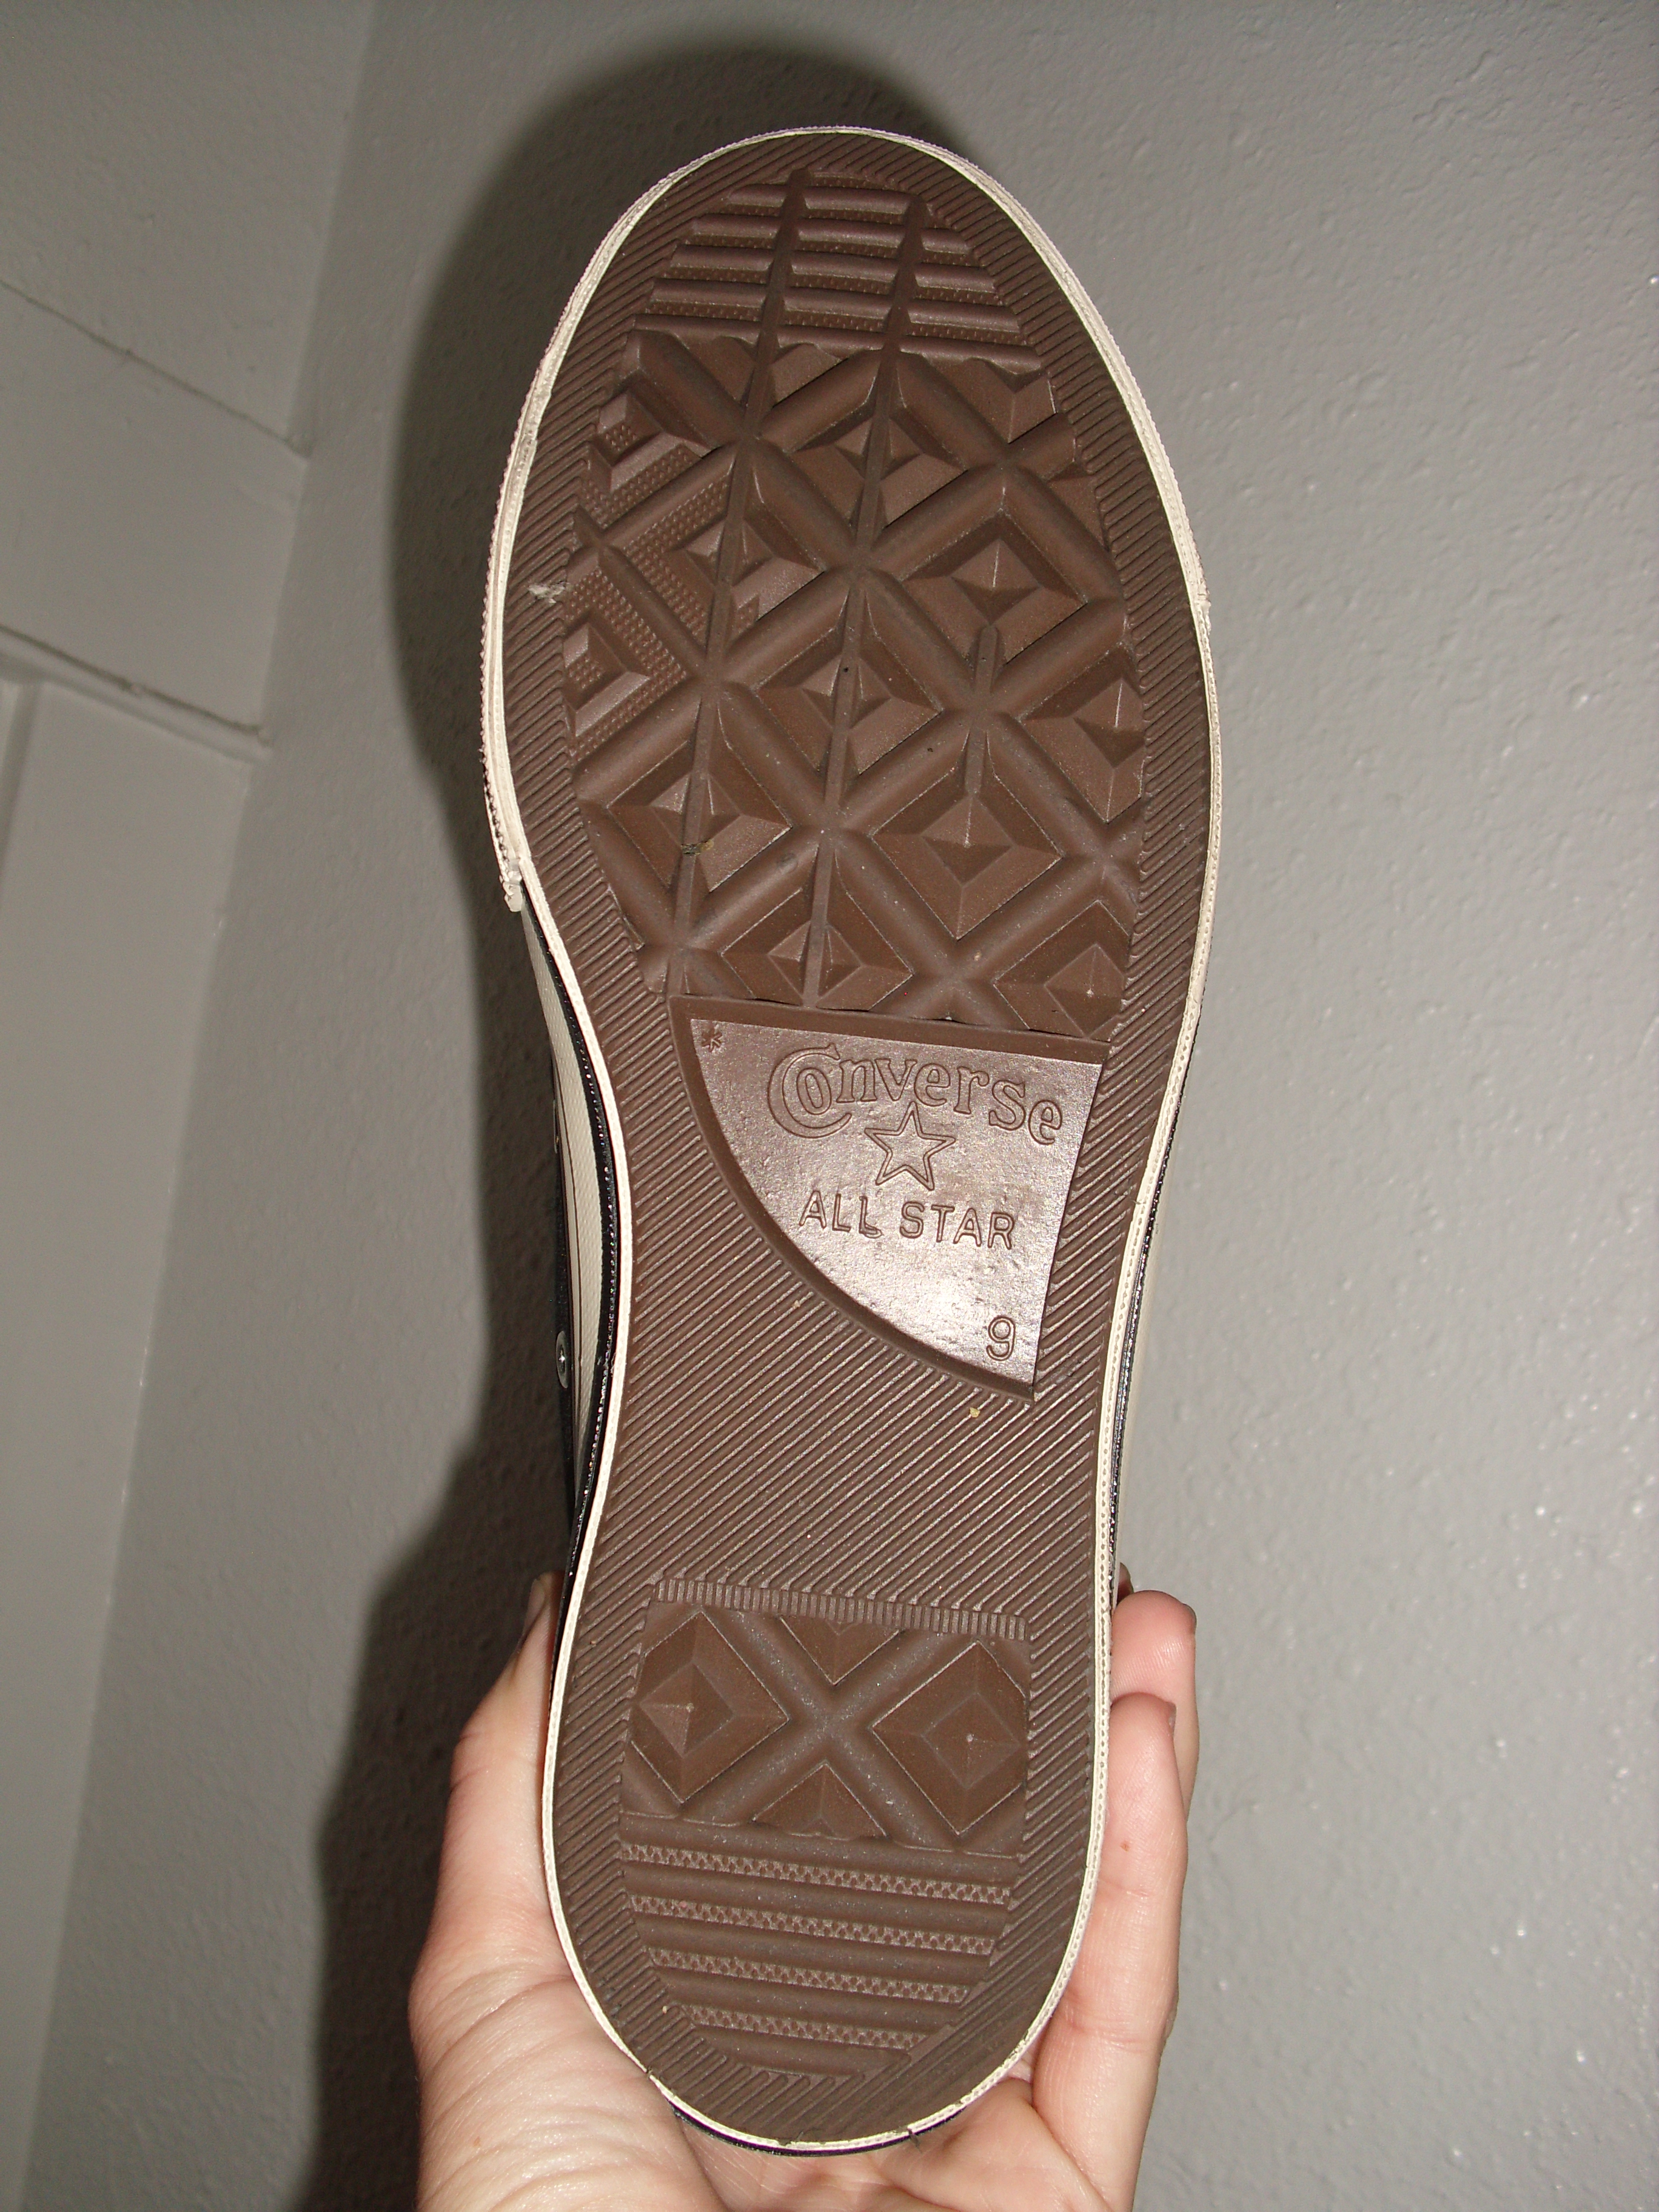 bottom of a converse shoe